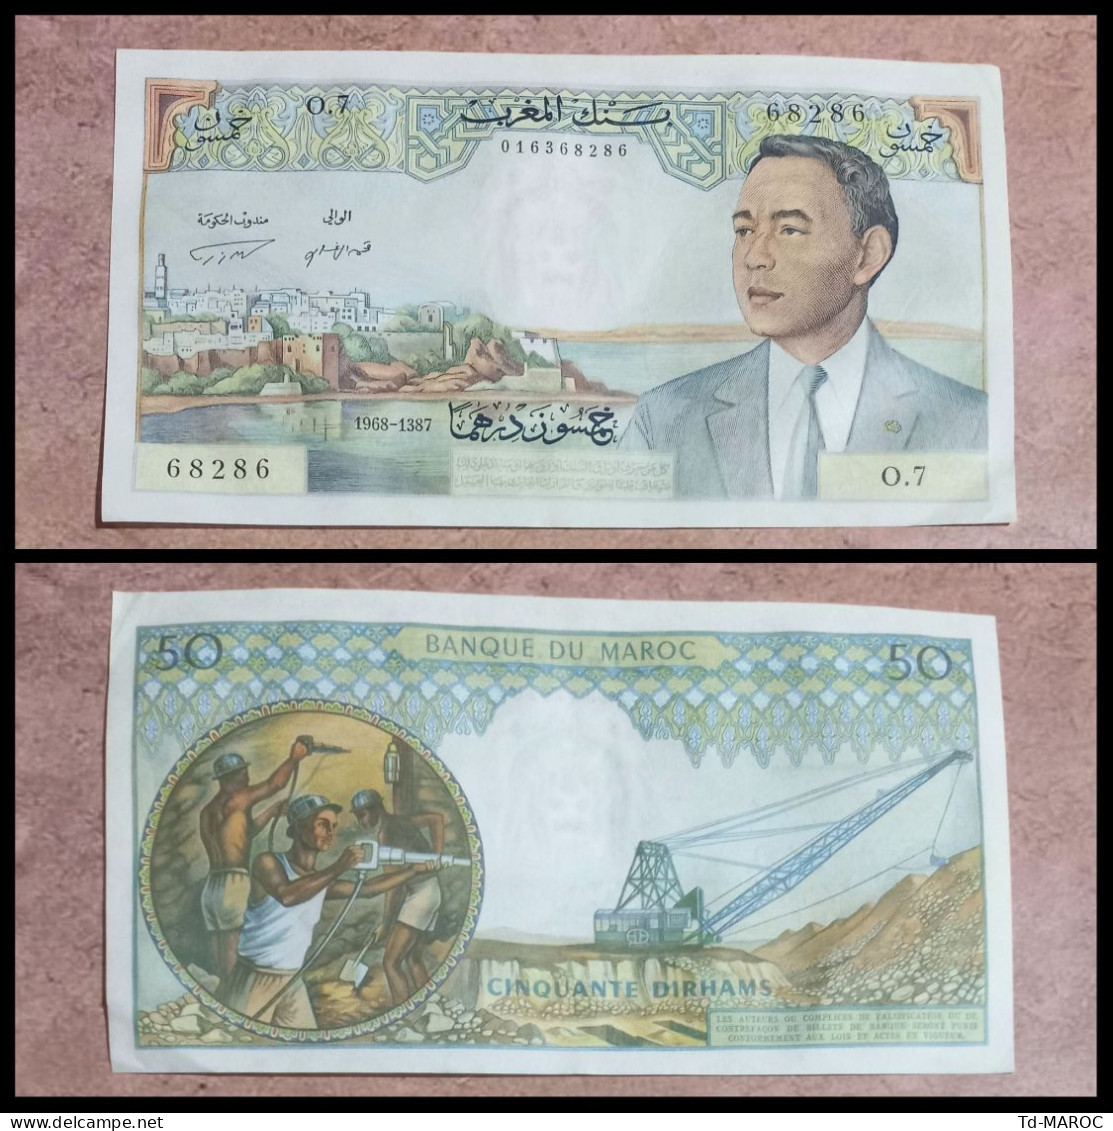 MAROC : Billet De 50 Dirhams 1968 P.55c / Alph.O.7 N° De Série RADAR 68286 - Marocco